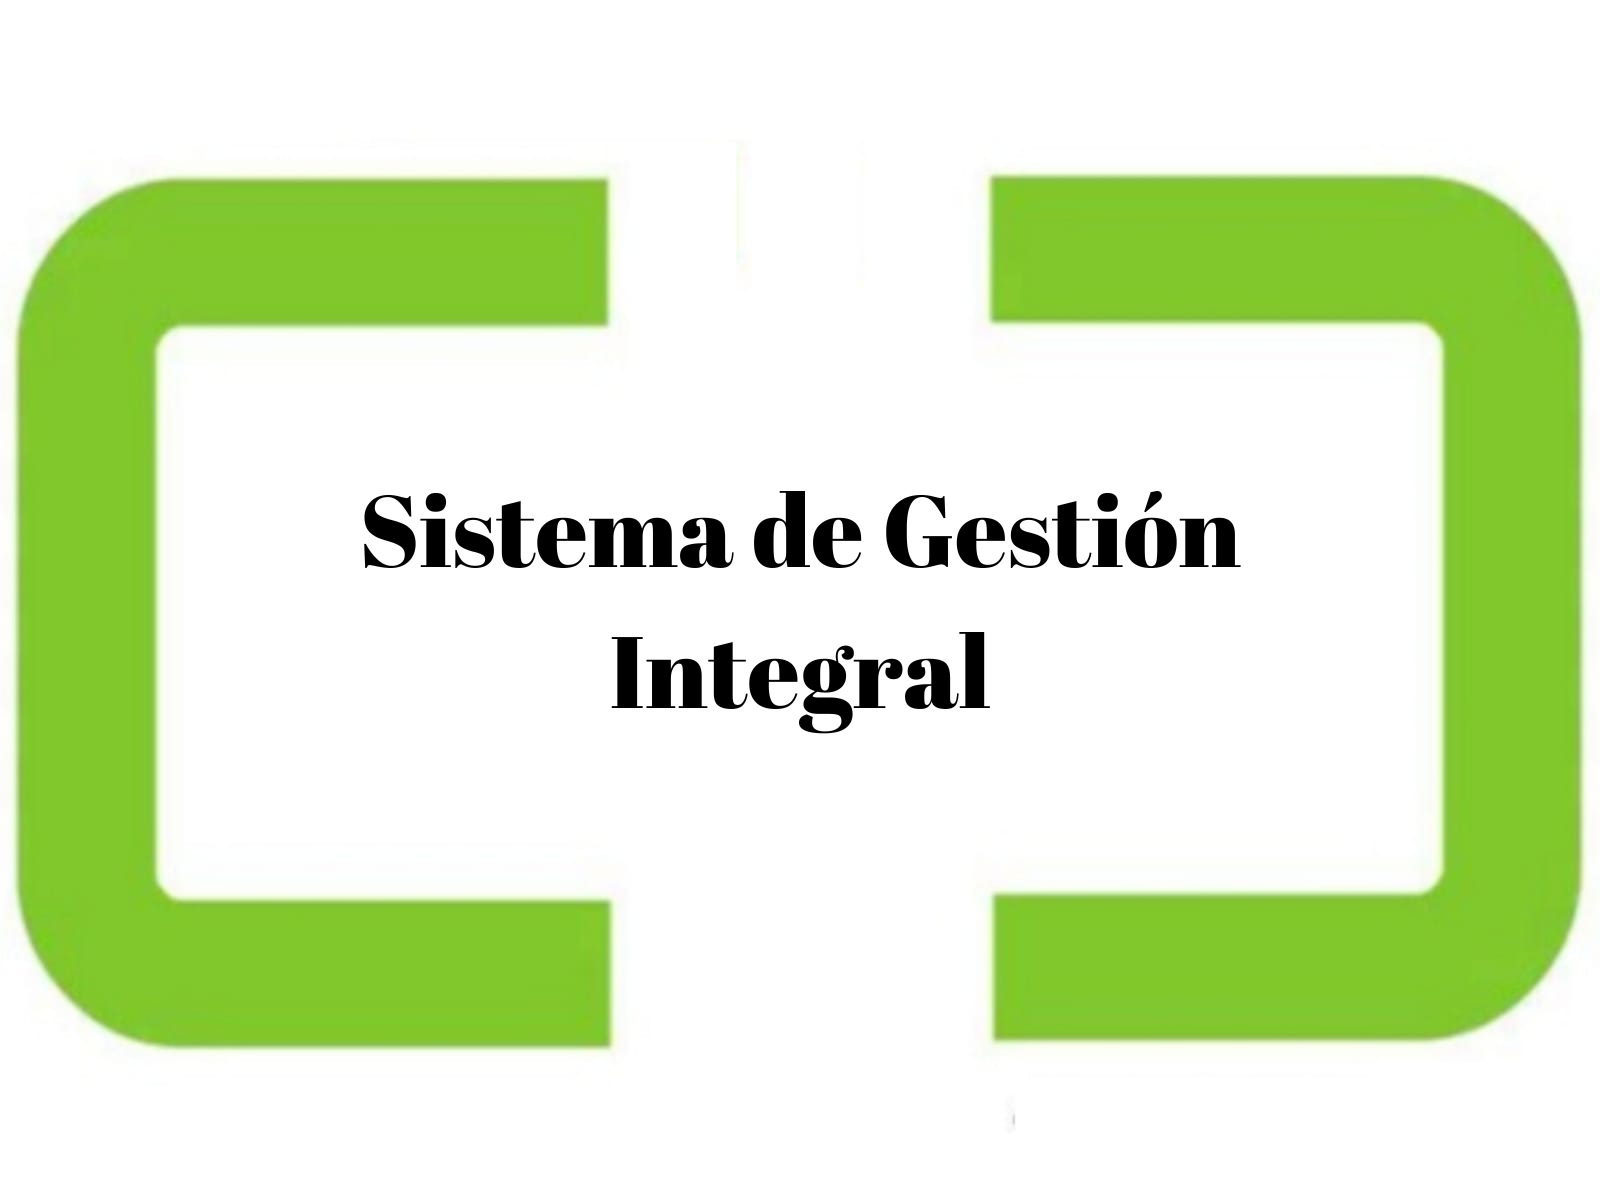 Sistema de Gestión Integral